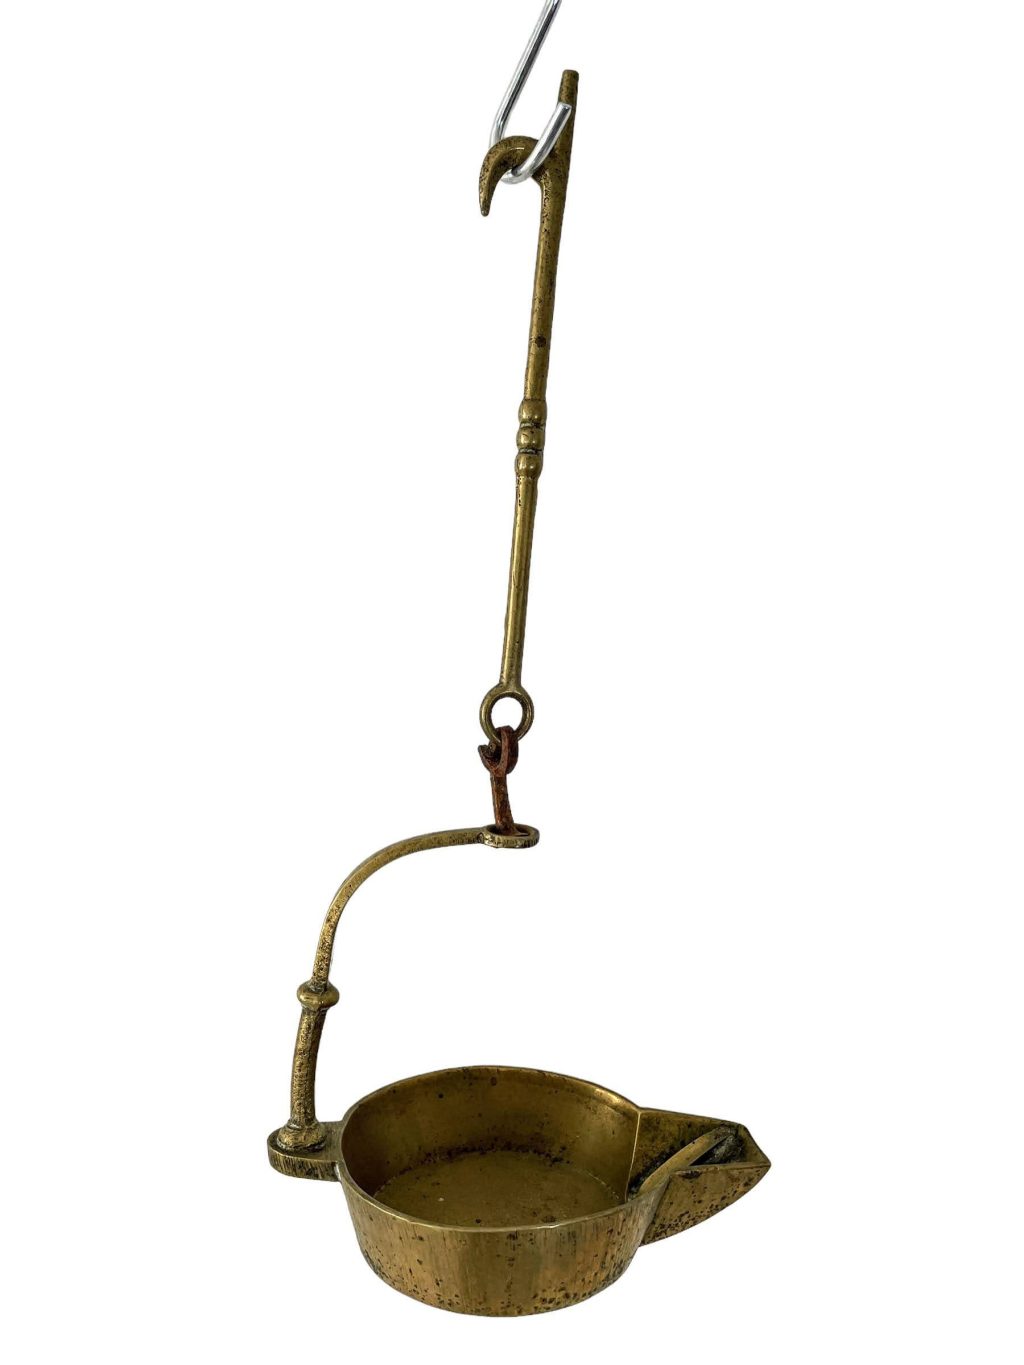 Antique French Brass Oil Lamp Burner Light Hanging Hook Decor Display Prop Lighting Hallway Cloakroom Kitchen c1910’s